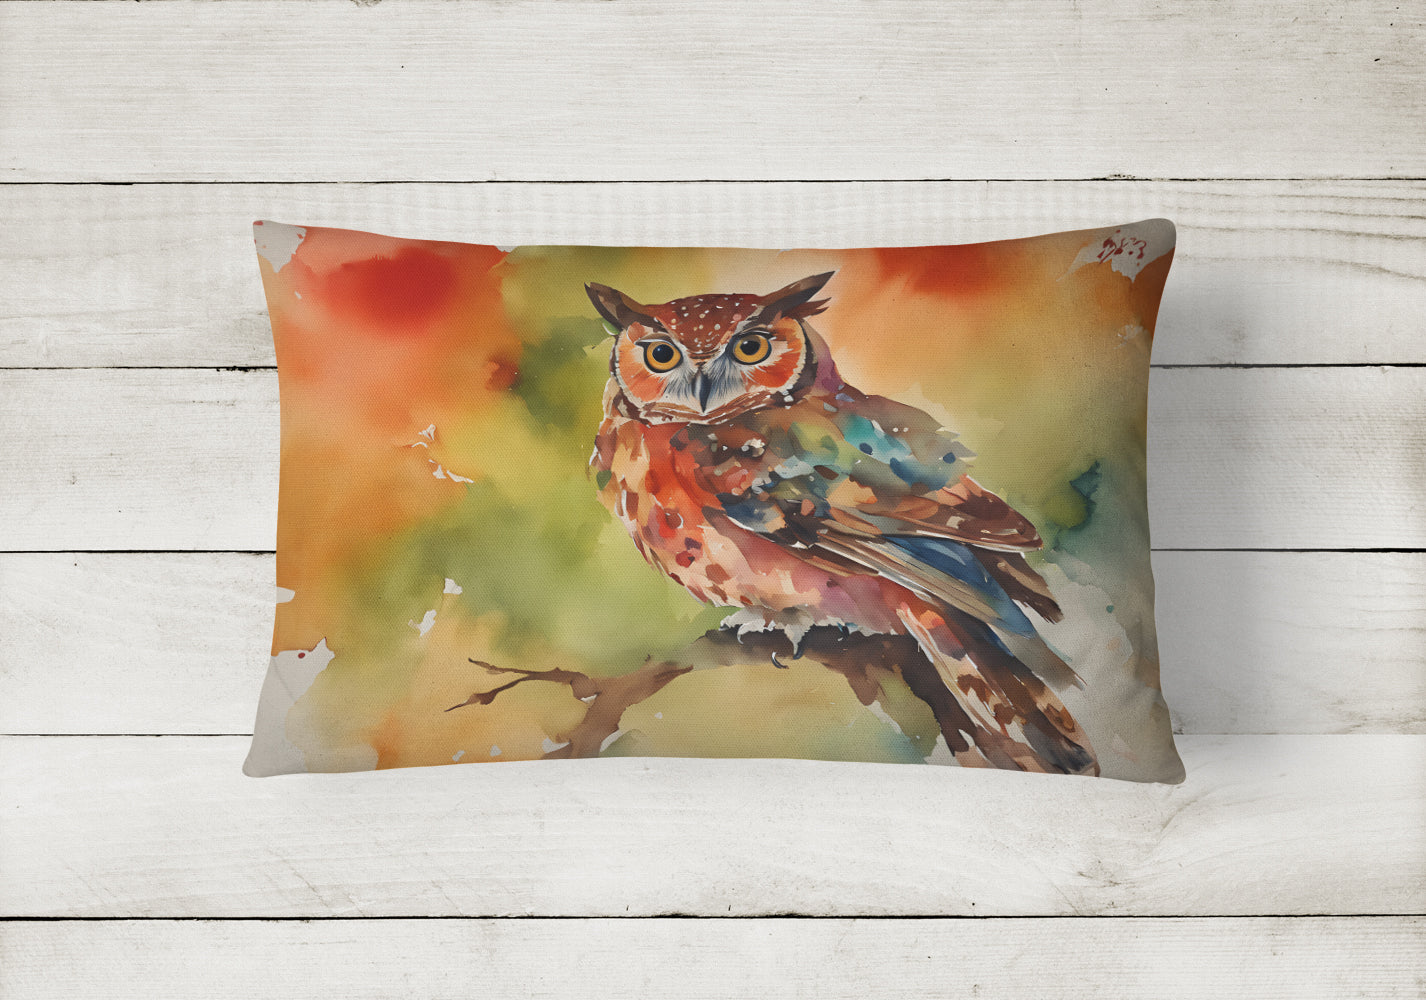 Buy this Elf Owl Throw Pillow